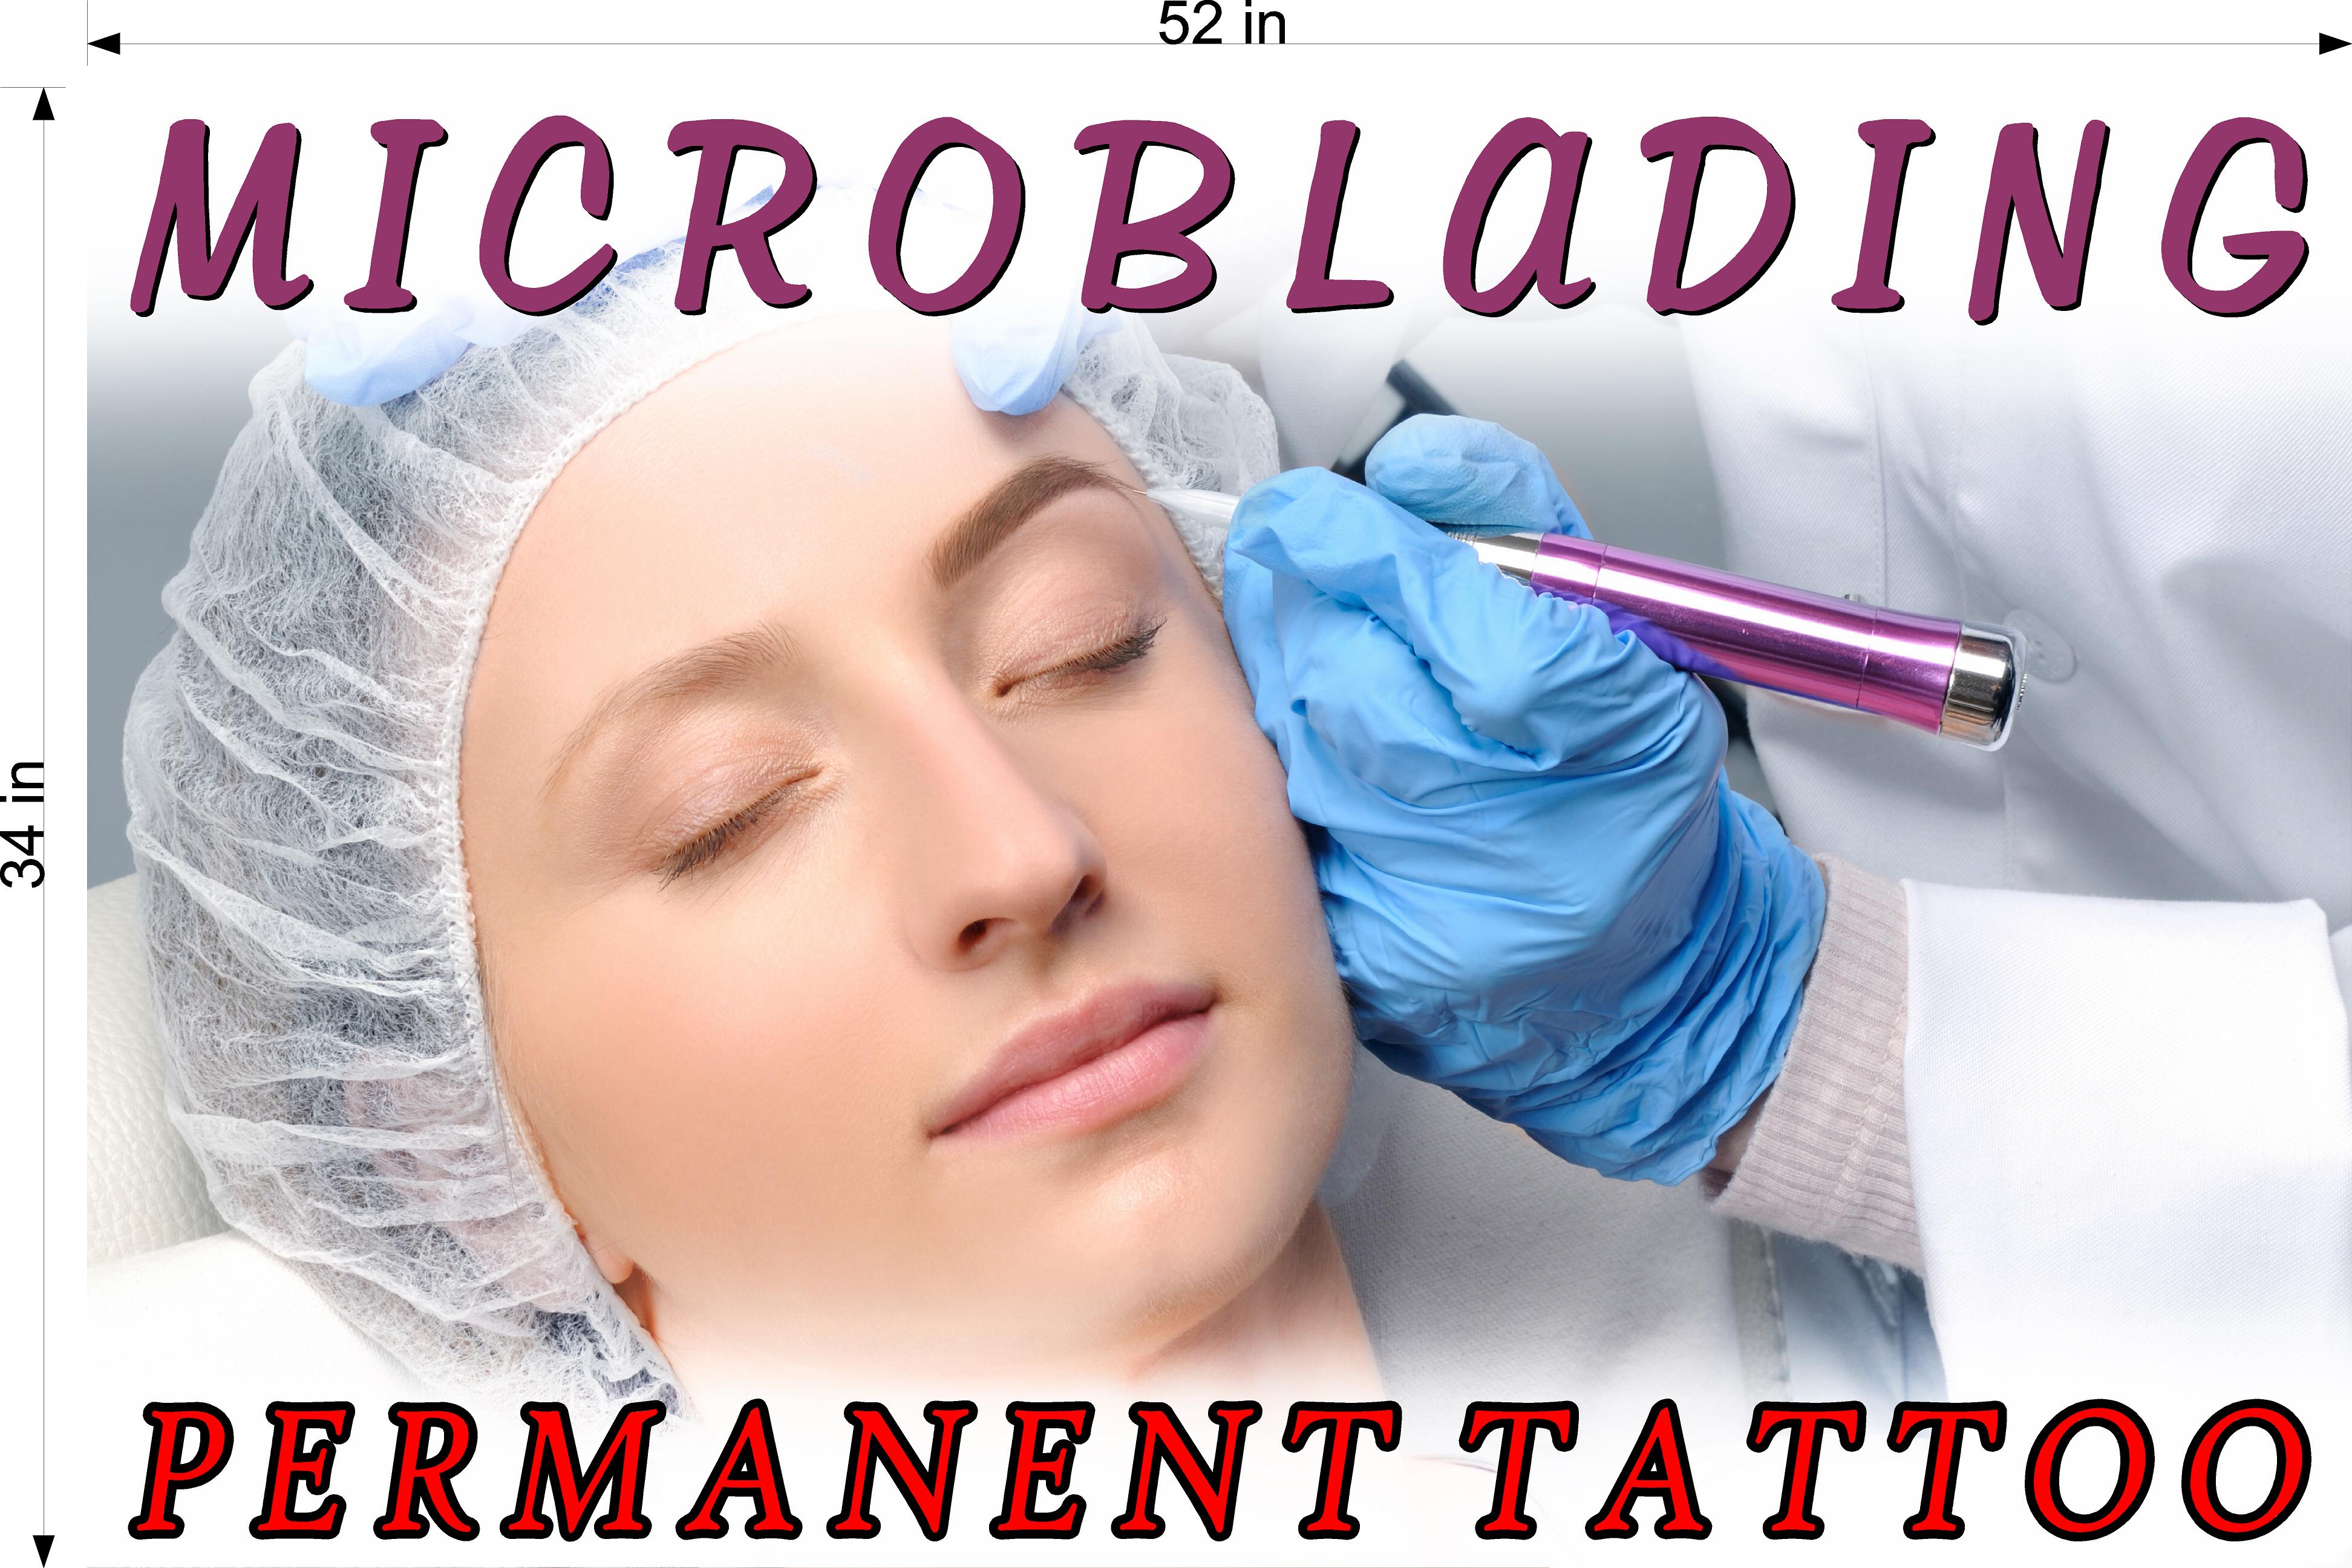 Microblading 09 Wallpaper Poster with Adhesive Backing Wall Interior Permanent Tattoo Horizontal